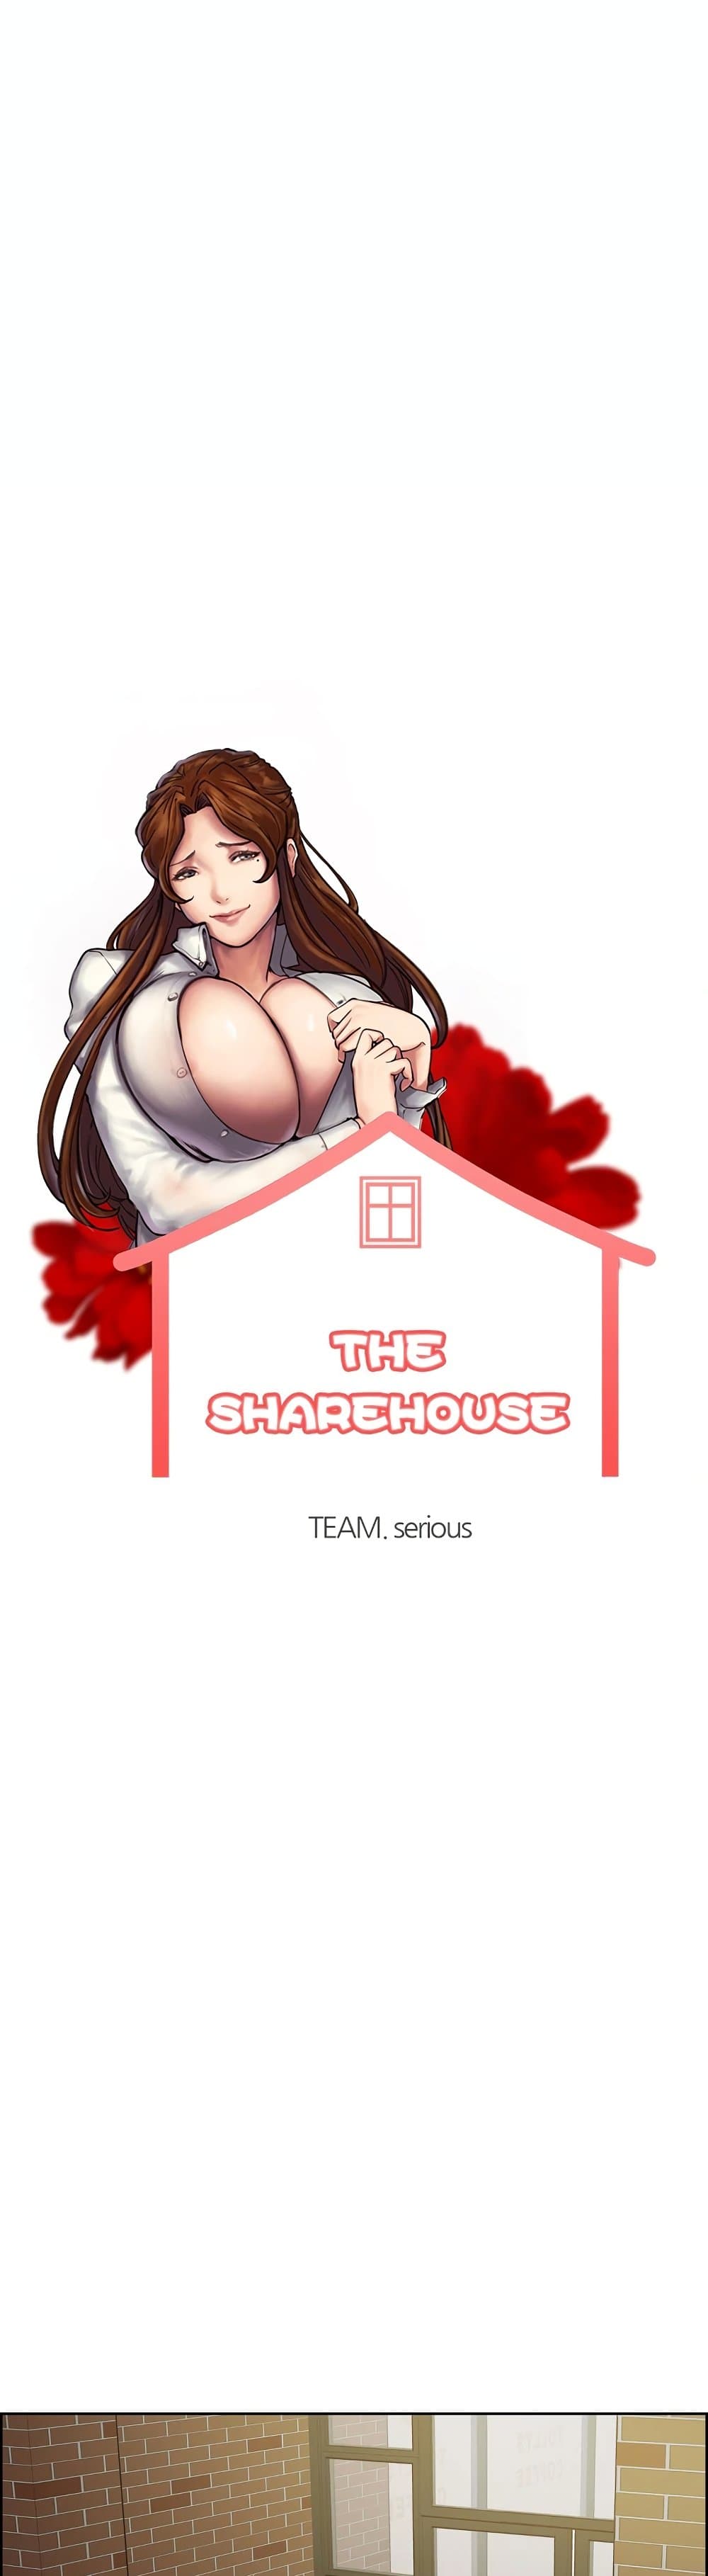 The Sharehouse 18 (1)